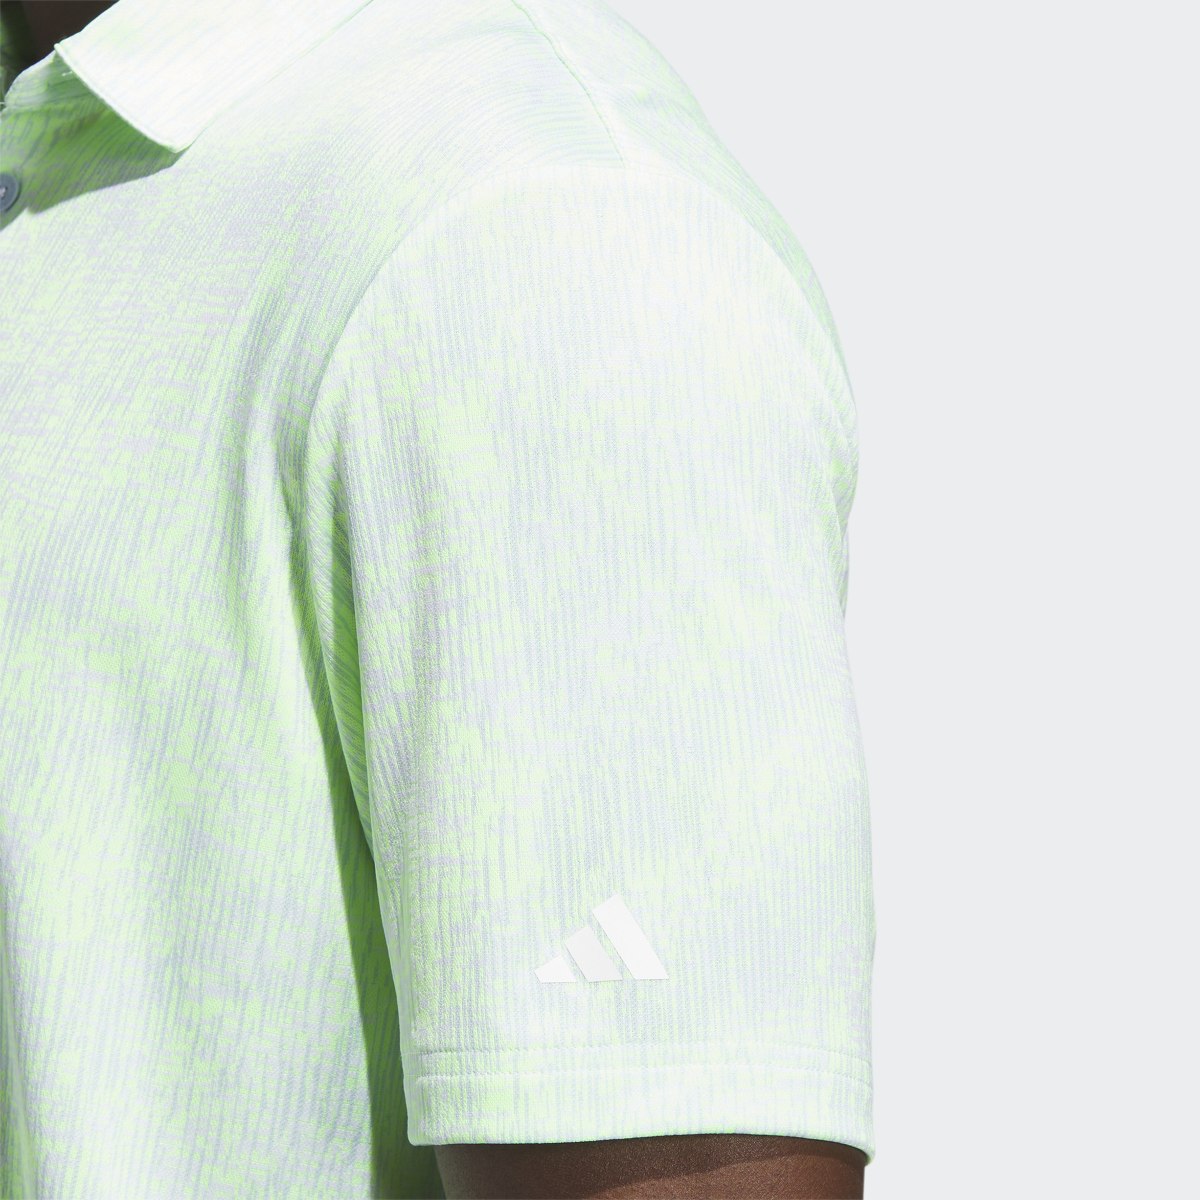 Adidas Aerial Jacquard Golf Polo Shirt. 7